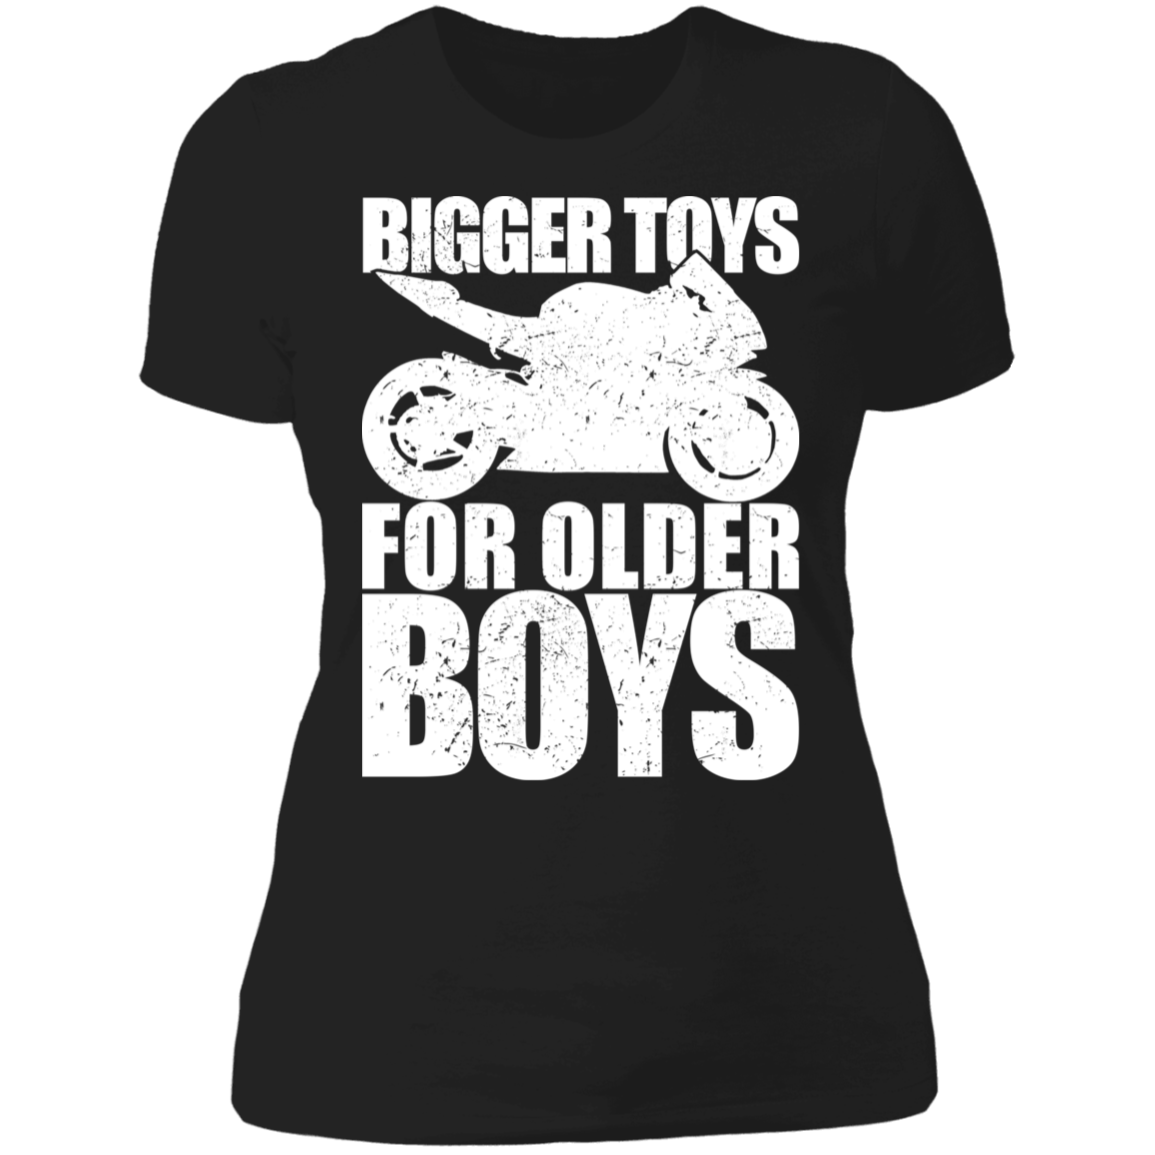 BIGGER TOYS FOR OLDER BOYS LADIES T-SHIRT Black X-Small S M L XL 2XL 3XL